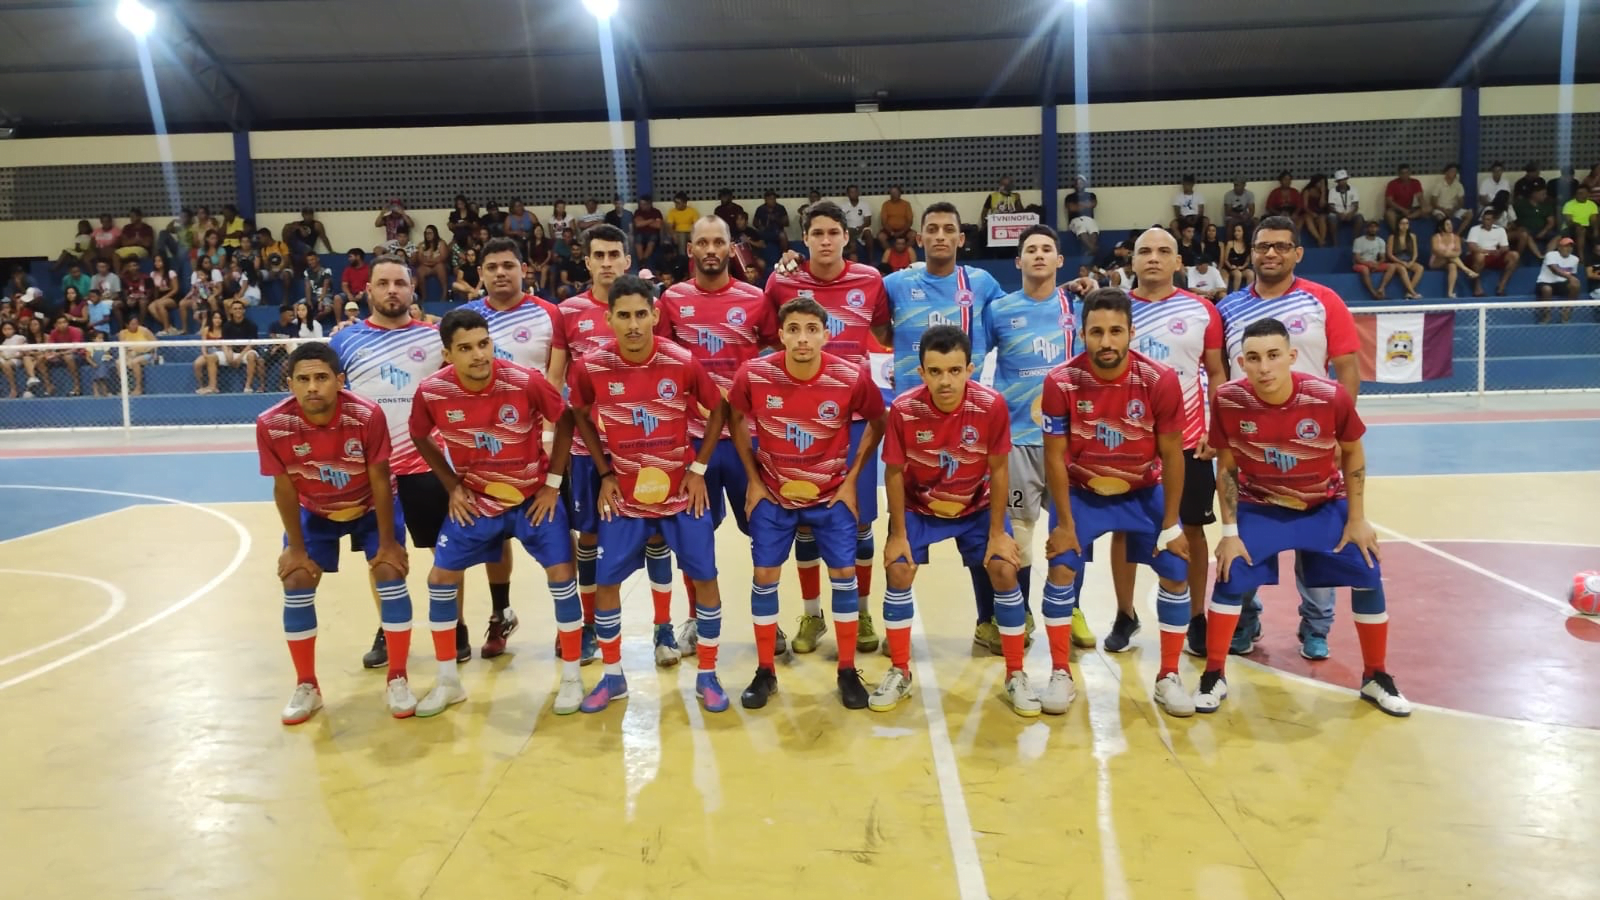 Equipe De Futsal De Glória (Ba) Conquista Título De Campeão Intermunicipal Adulto Masculino De Futsal